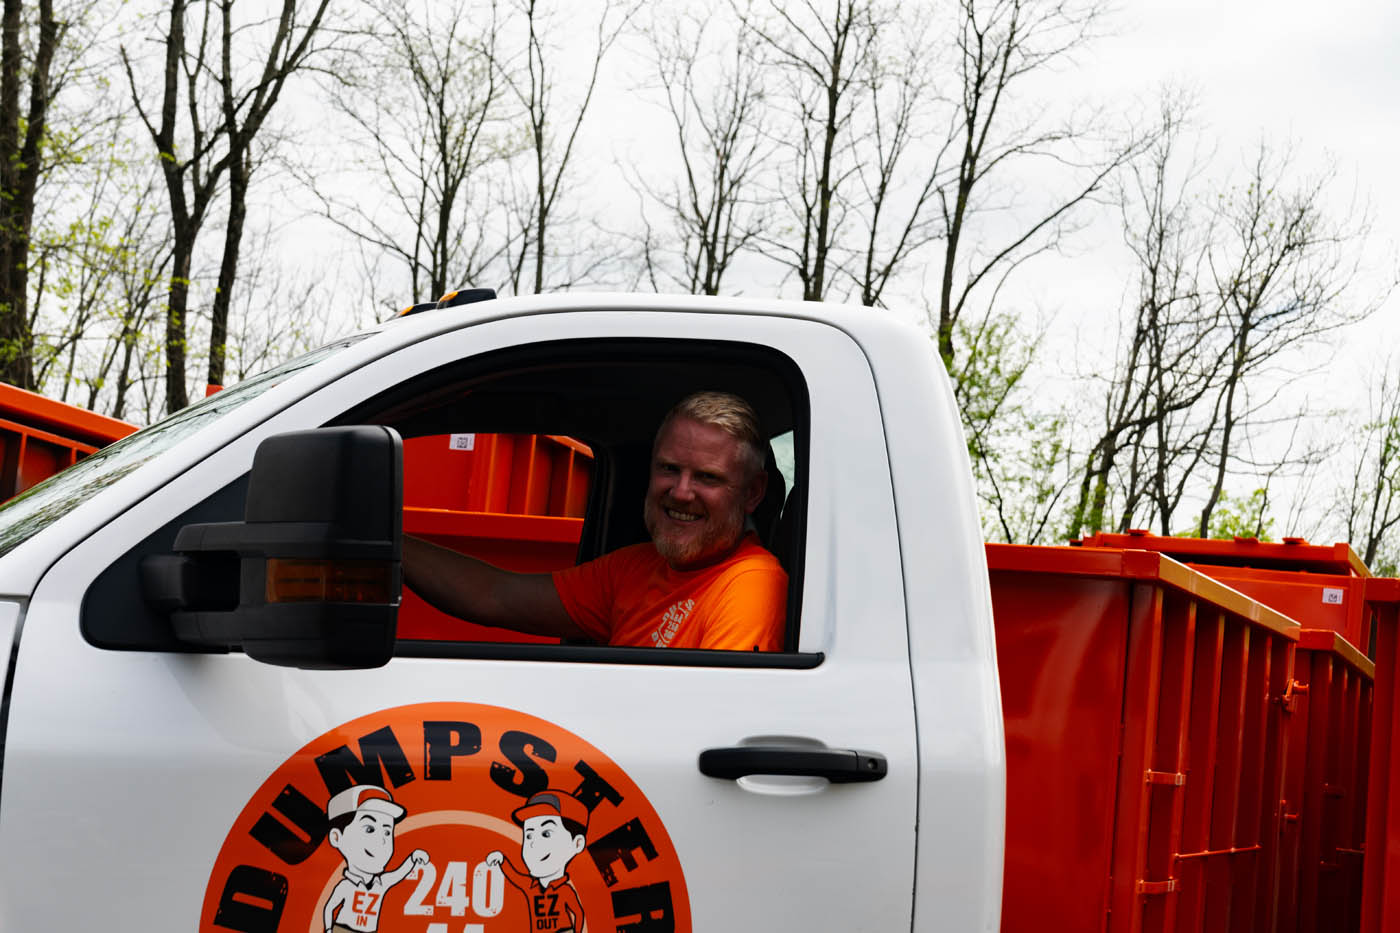 Dumpster Dudez truck - find reliable garbage dumpster rental.